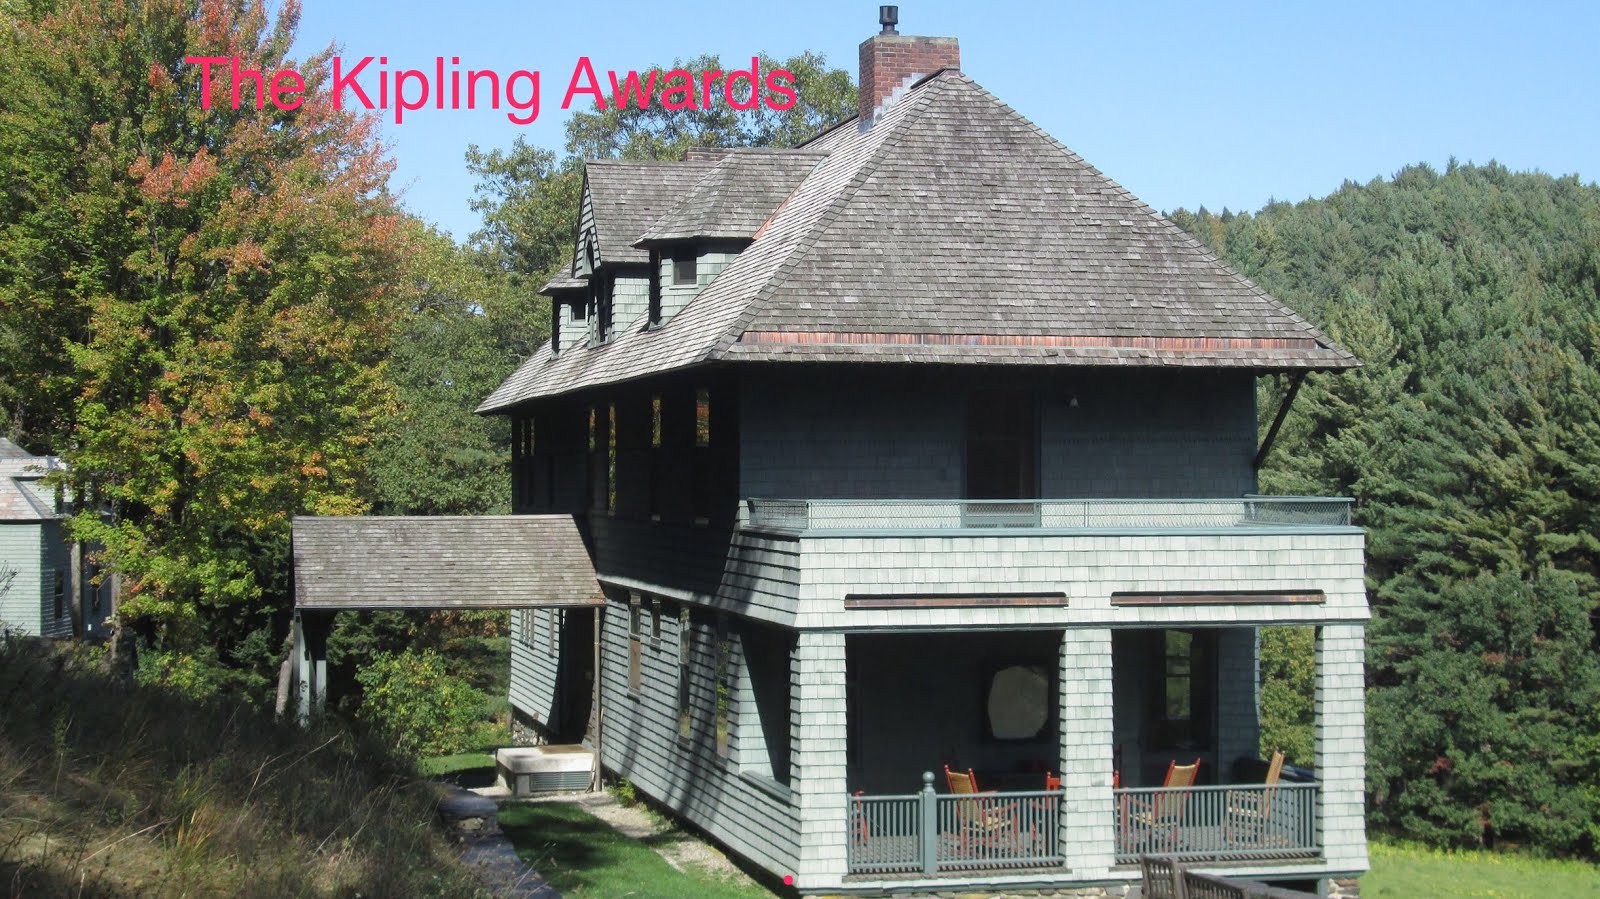 The Kipling Awards